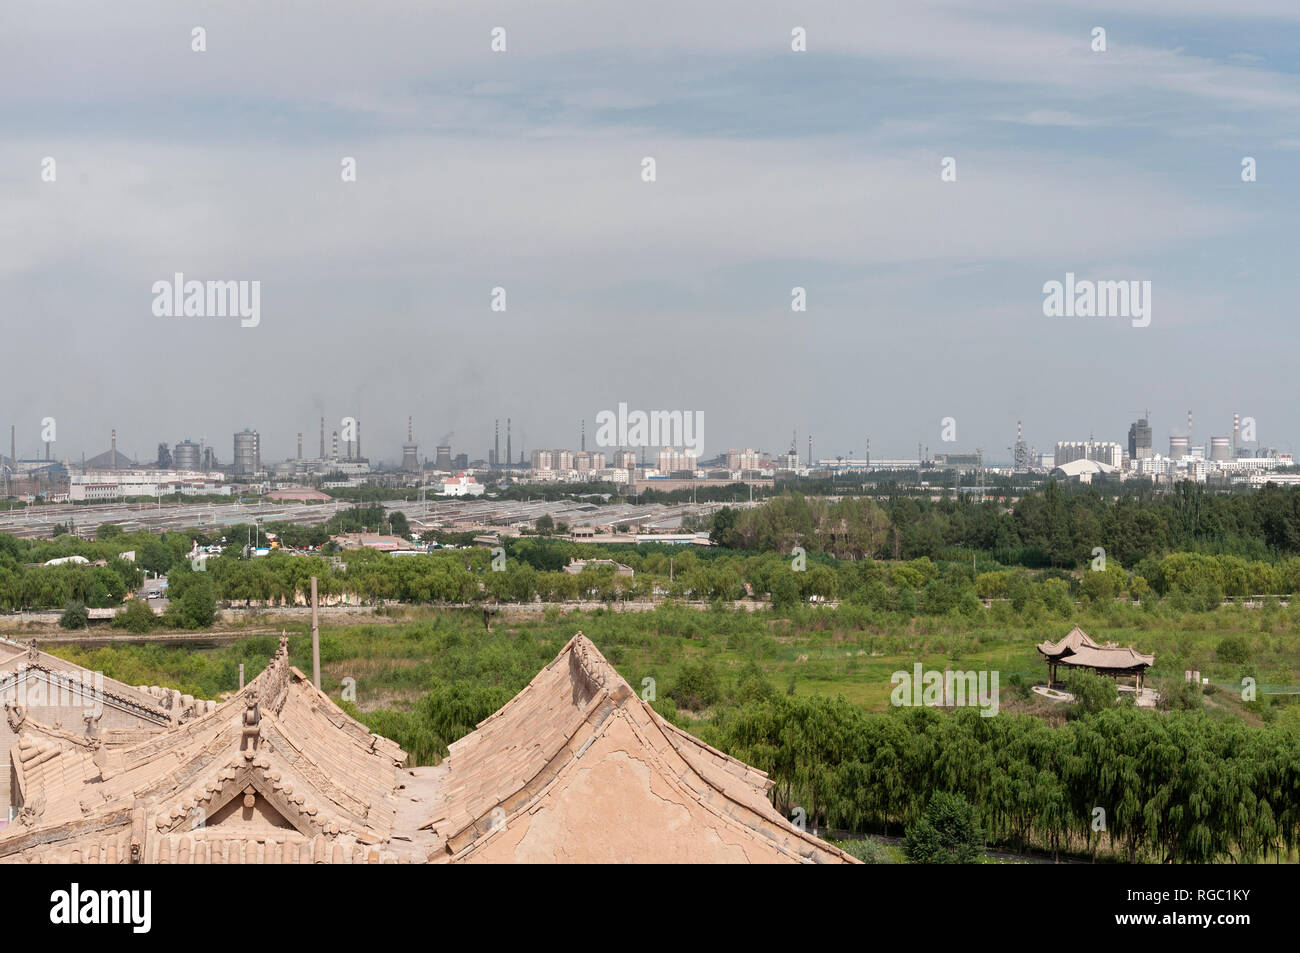 Jiayuguan, Cina - 9 Agosto 2012: Vista della città di Jiayuguan con fabbriche emiting gas verso l'atmosfera , nella provincia di Gansu, Cina. Foto Stock